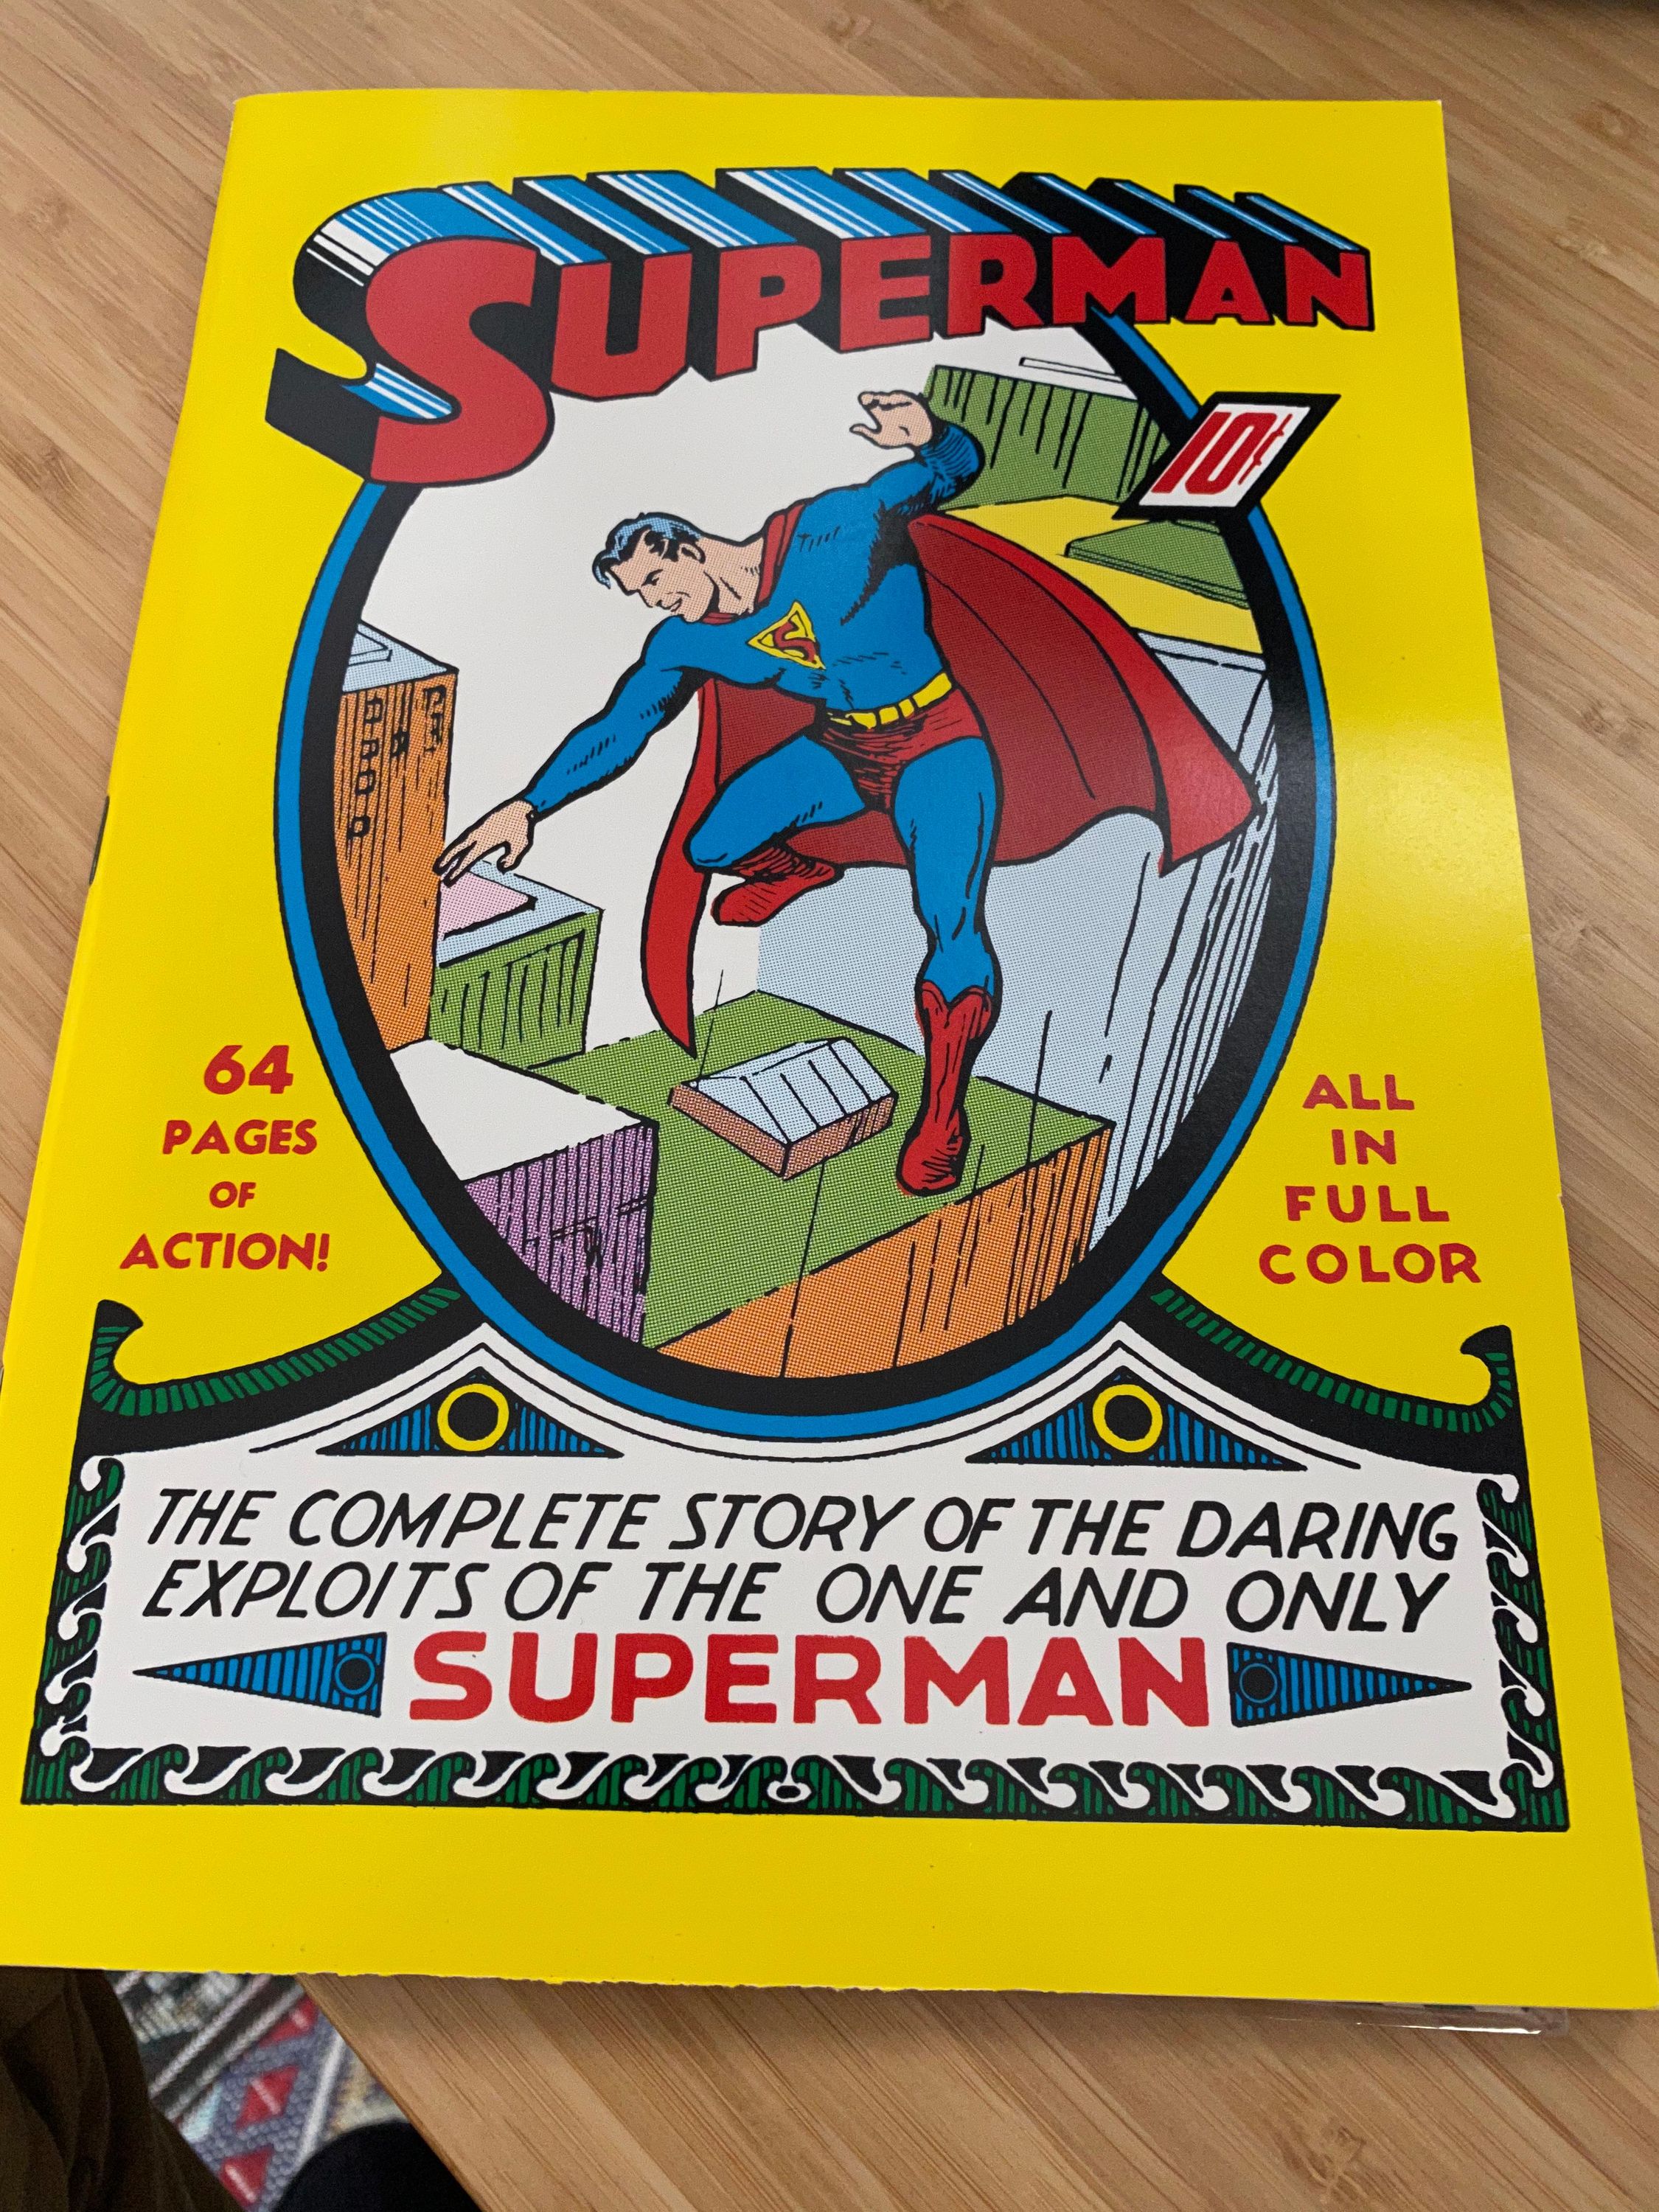 Superman by Joe Shuster